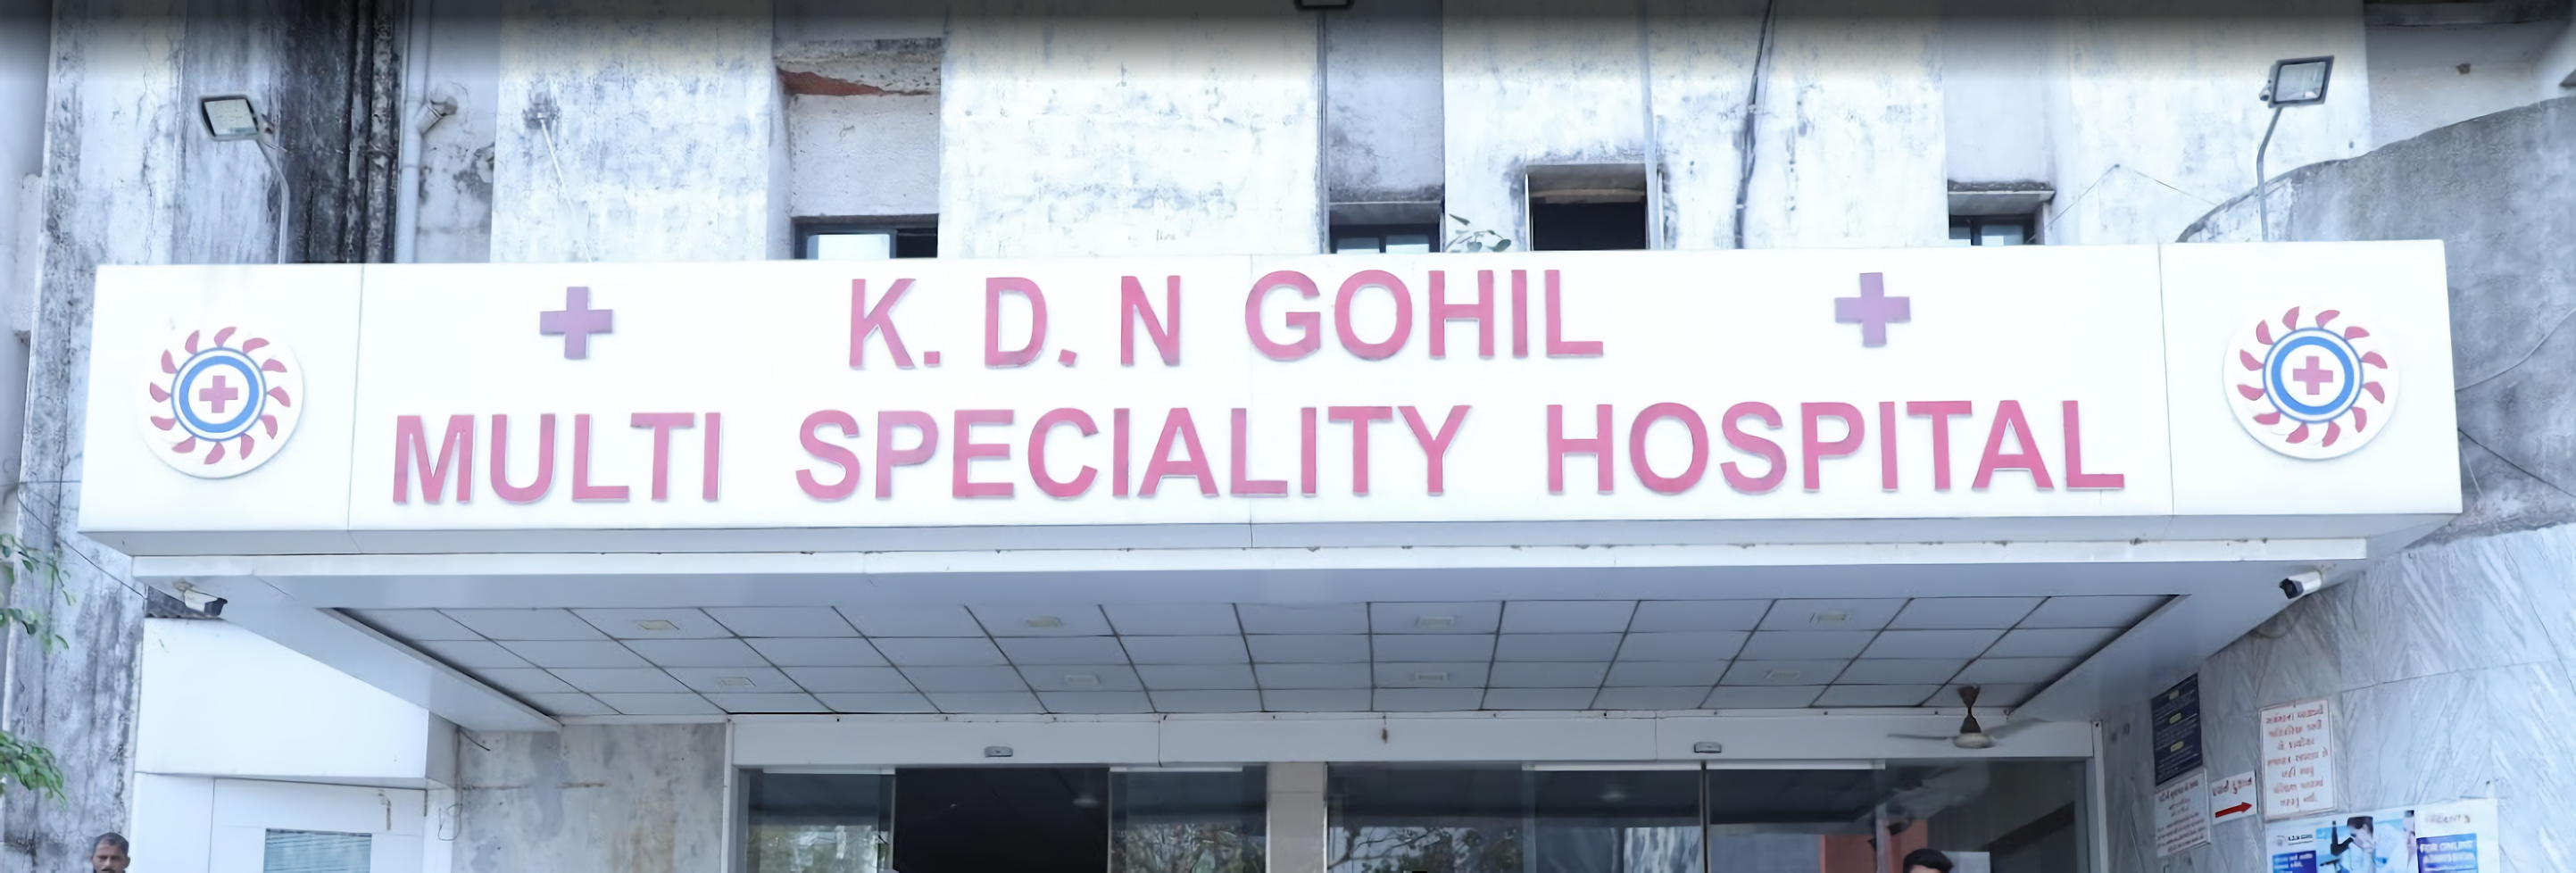 K. D. N. Gohil Hospital